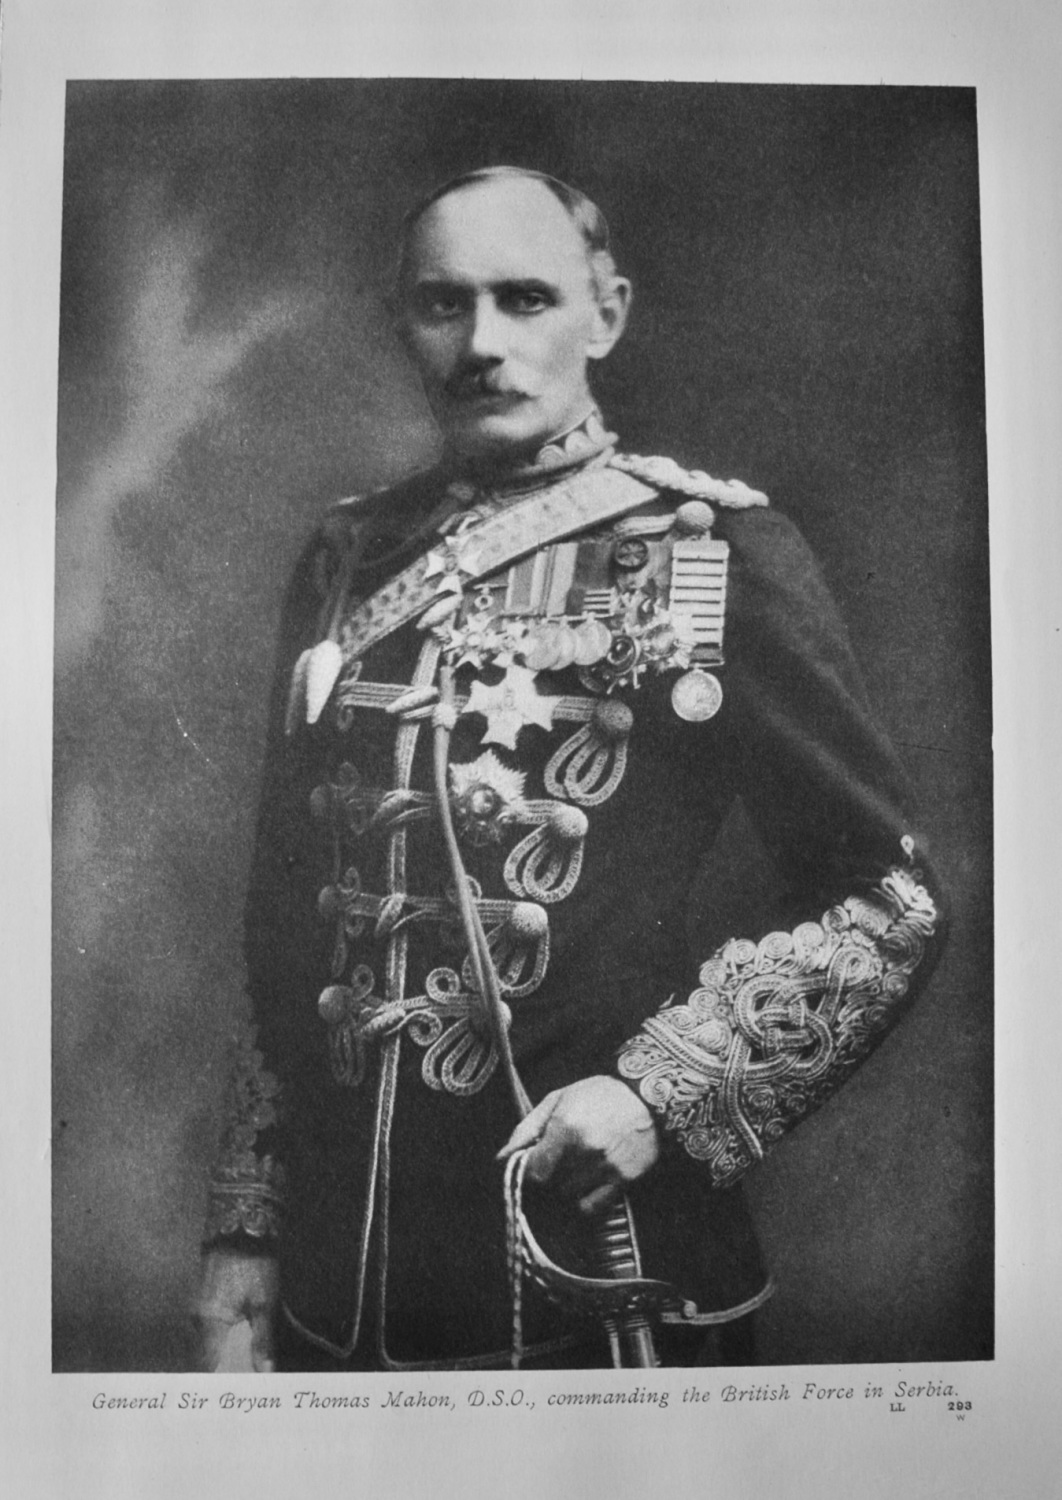 General Sir Bryan Thomas Mahon, D.S.O., commanding the British Force in Ser